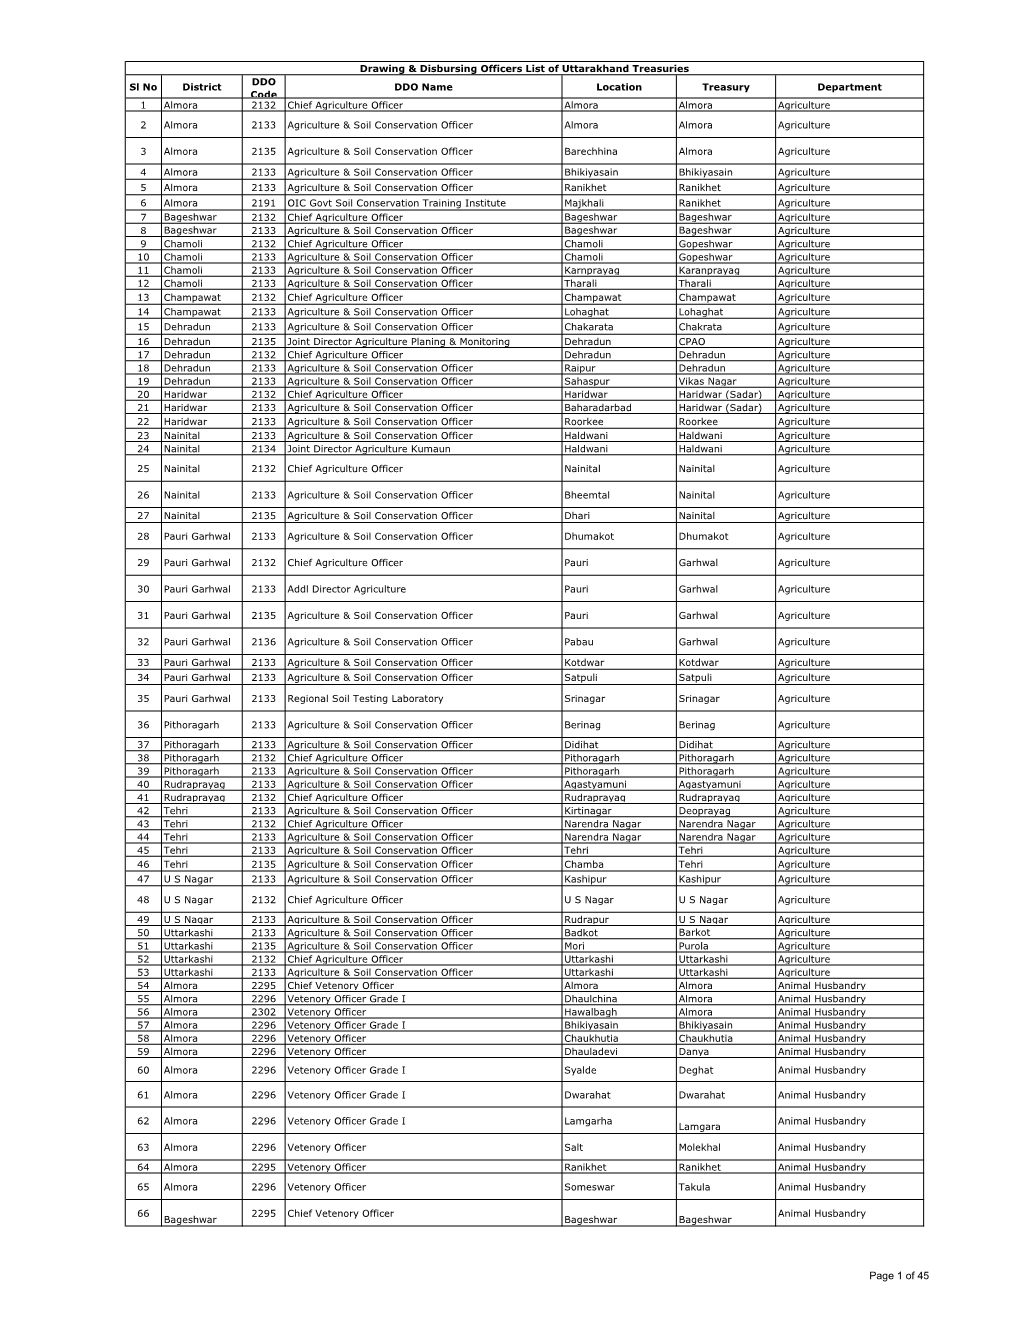 Page 1 of 45 DDO Sl No District DDO Name Location Treasury Department Code 67 Bageshwar 2296 Vetenory Officer Grade I Garur Garur Animal Husbandry